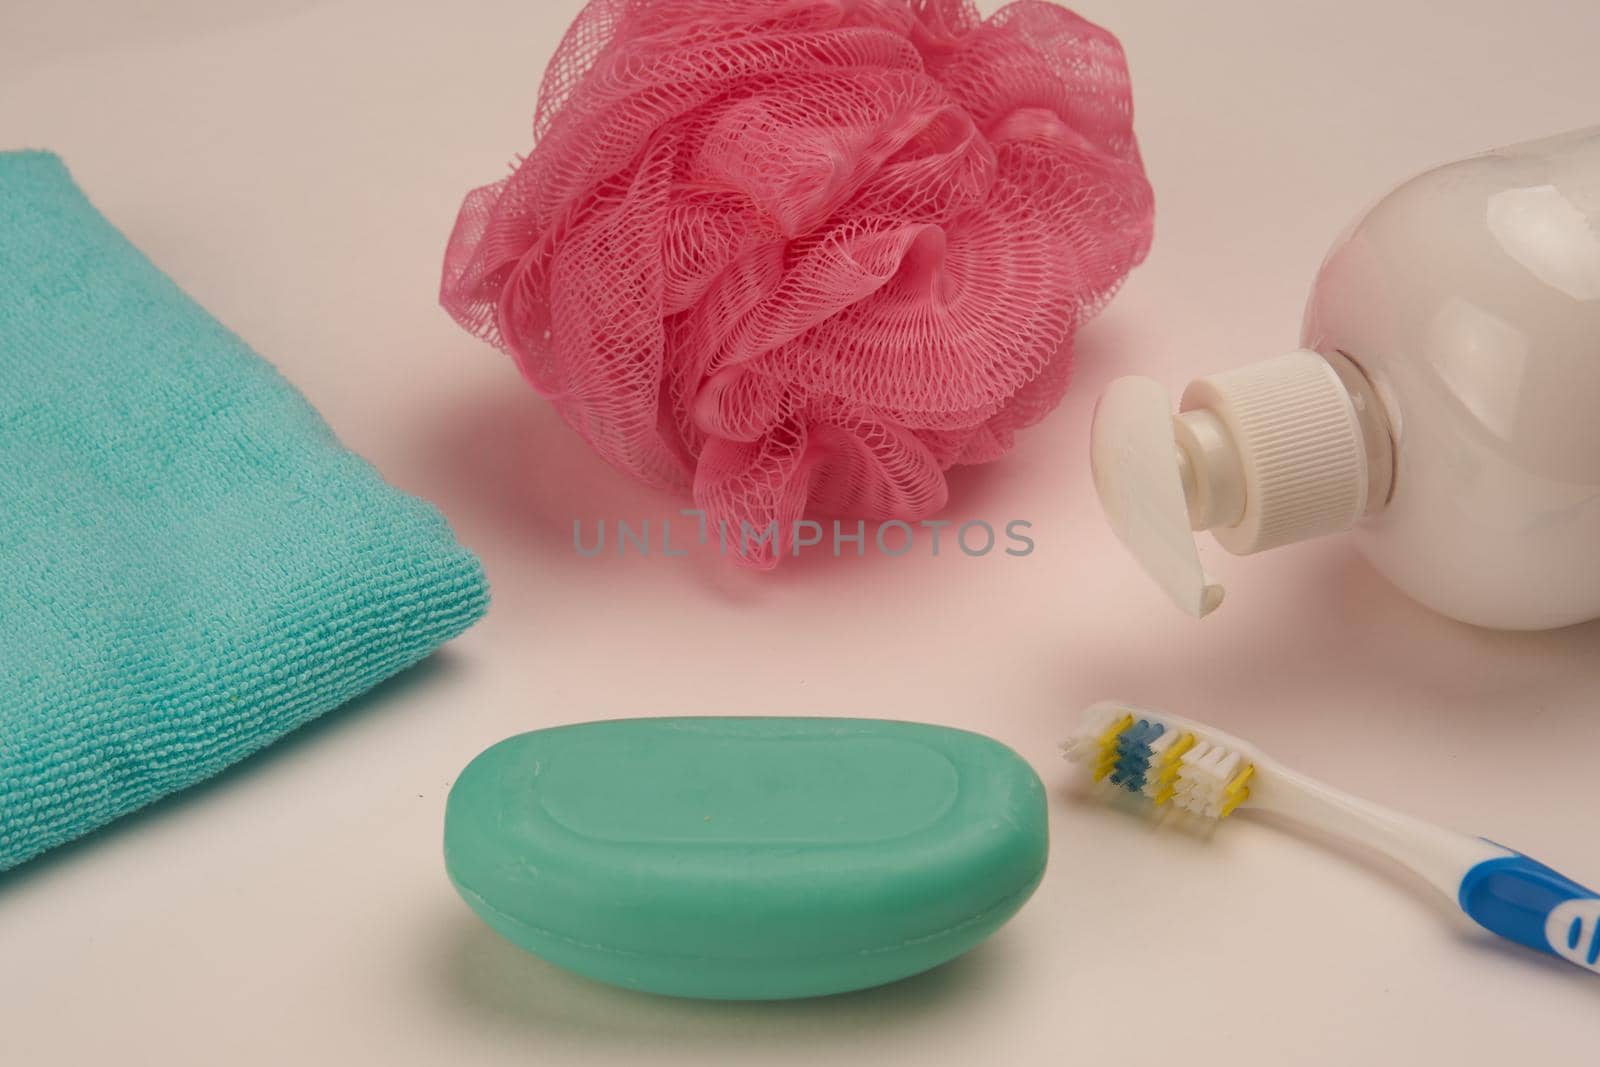 soap toothbrush hygiene health bathroom items. High quality photo